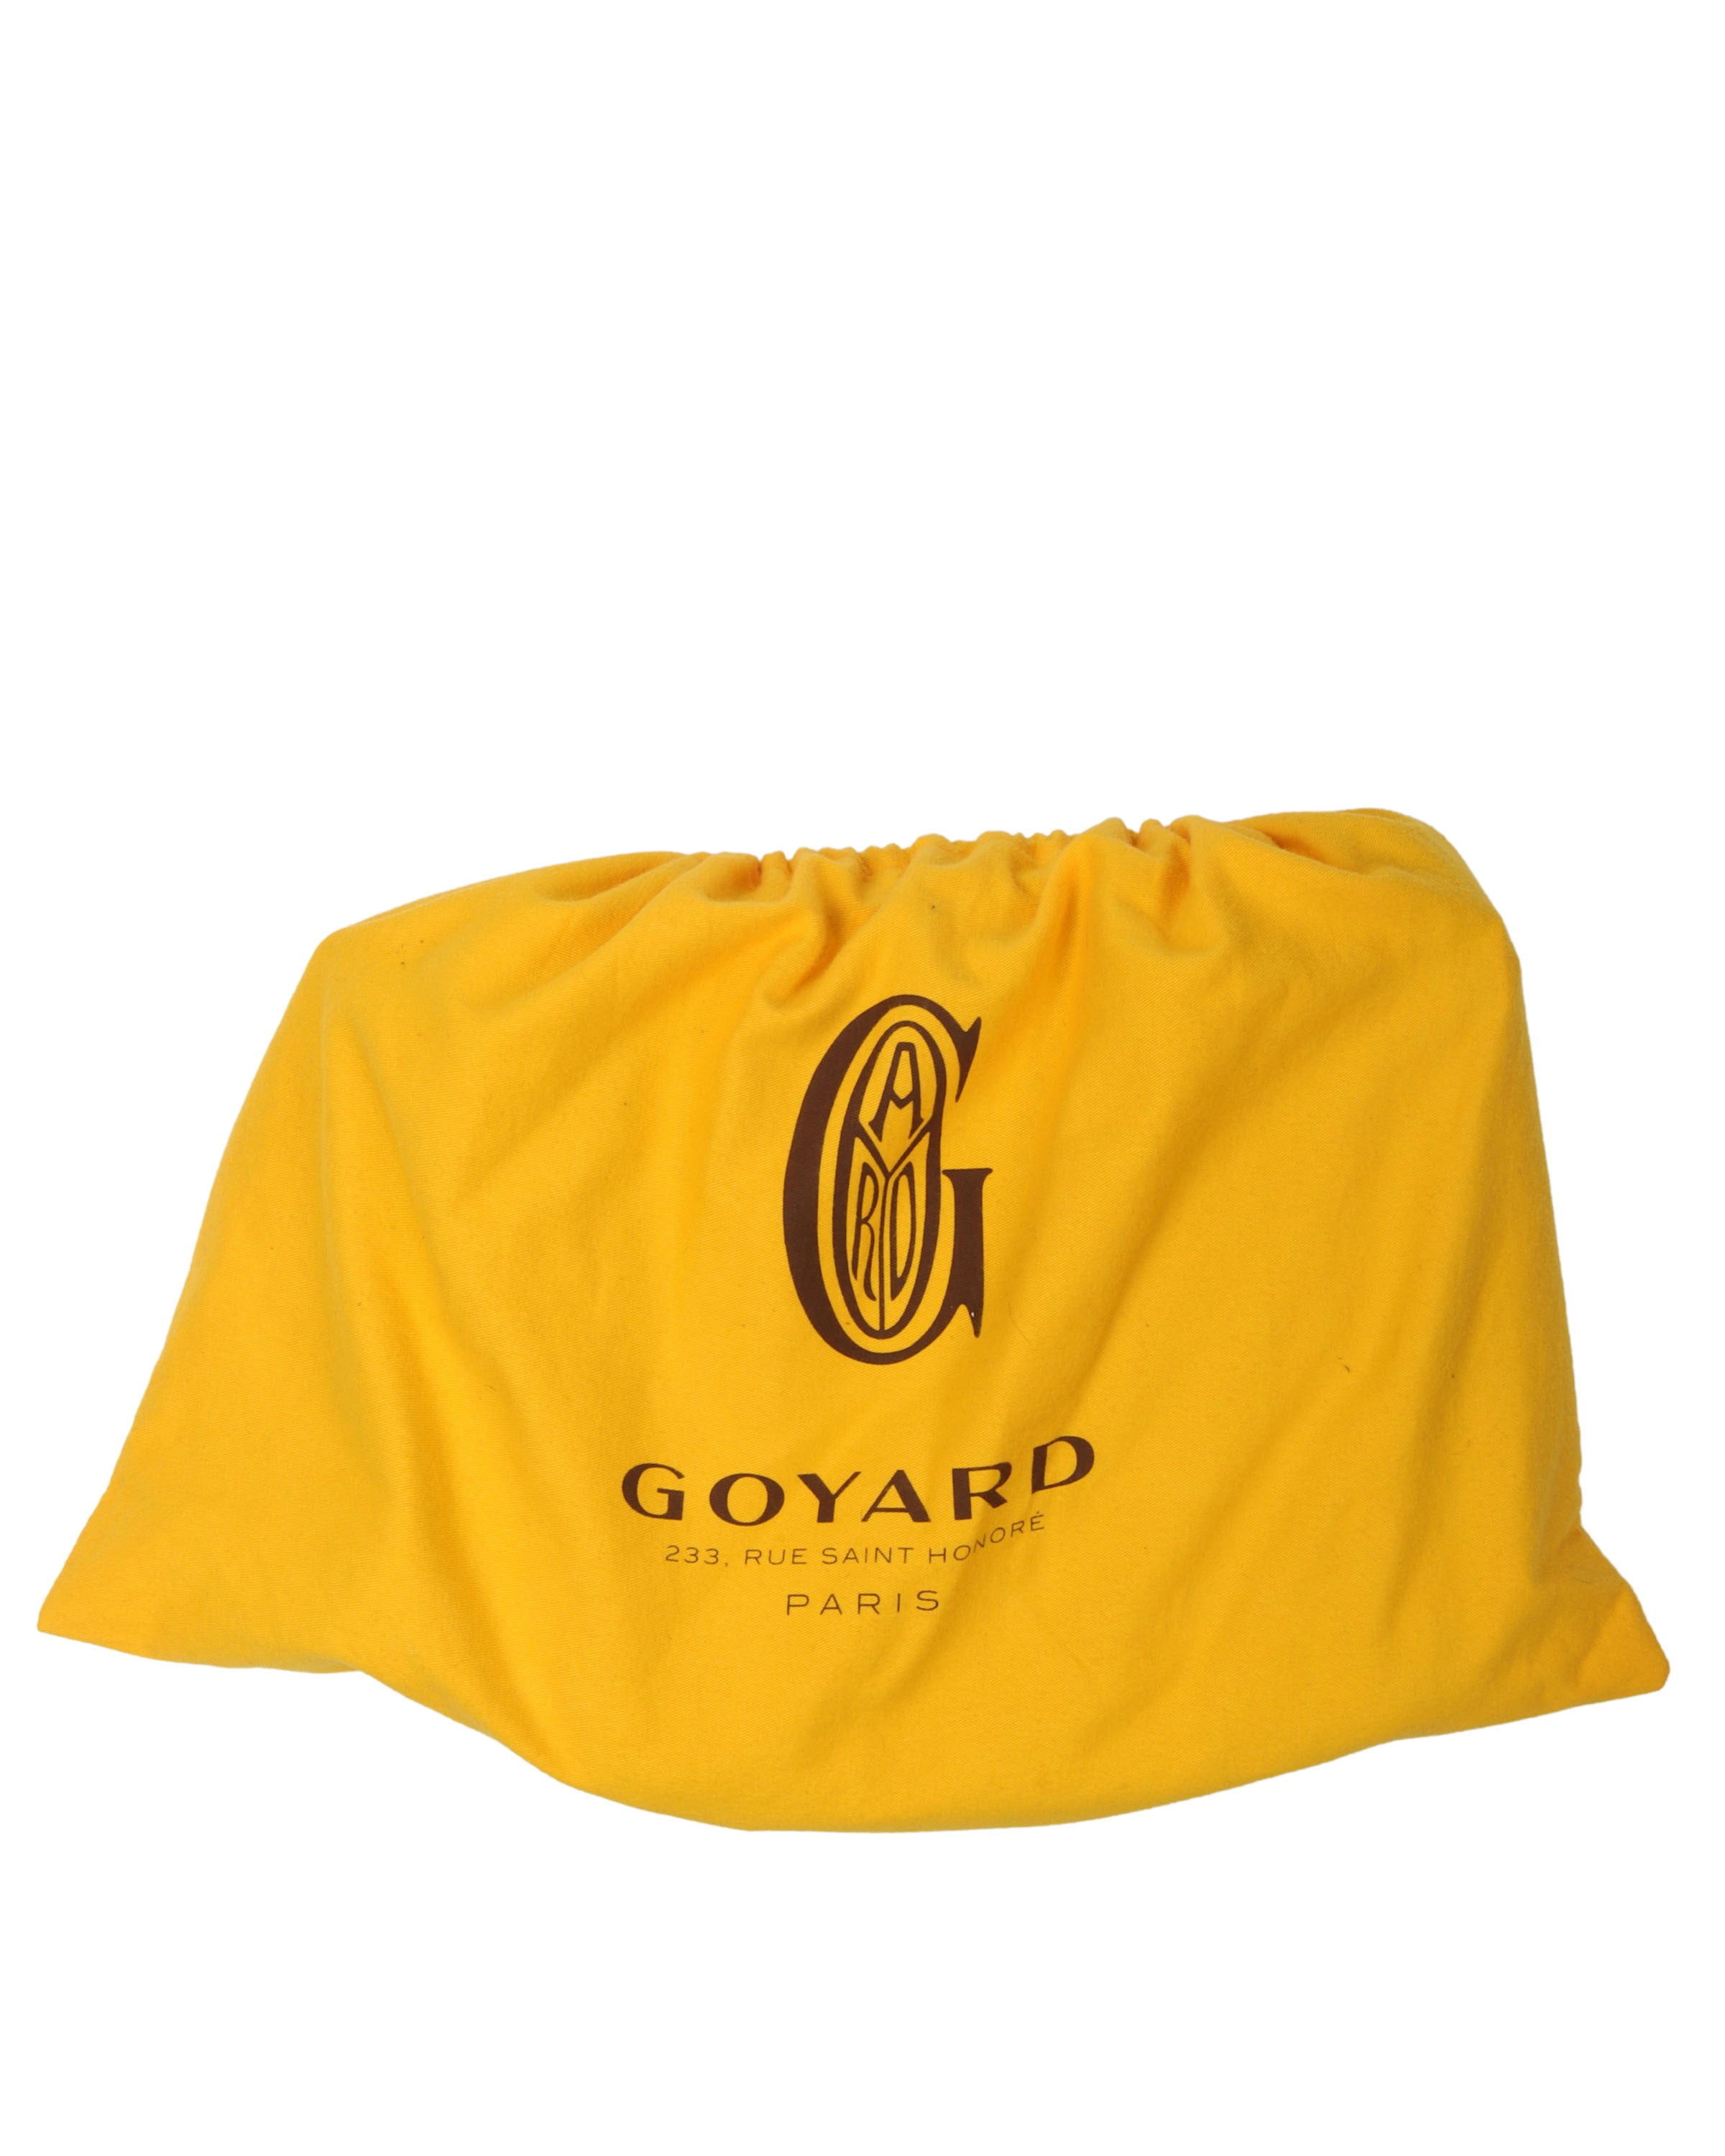 Goyard Messenger Bag - Black Messenger Bags, Bags - GOY01232